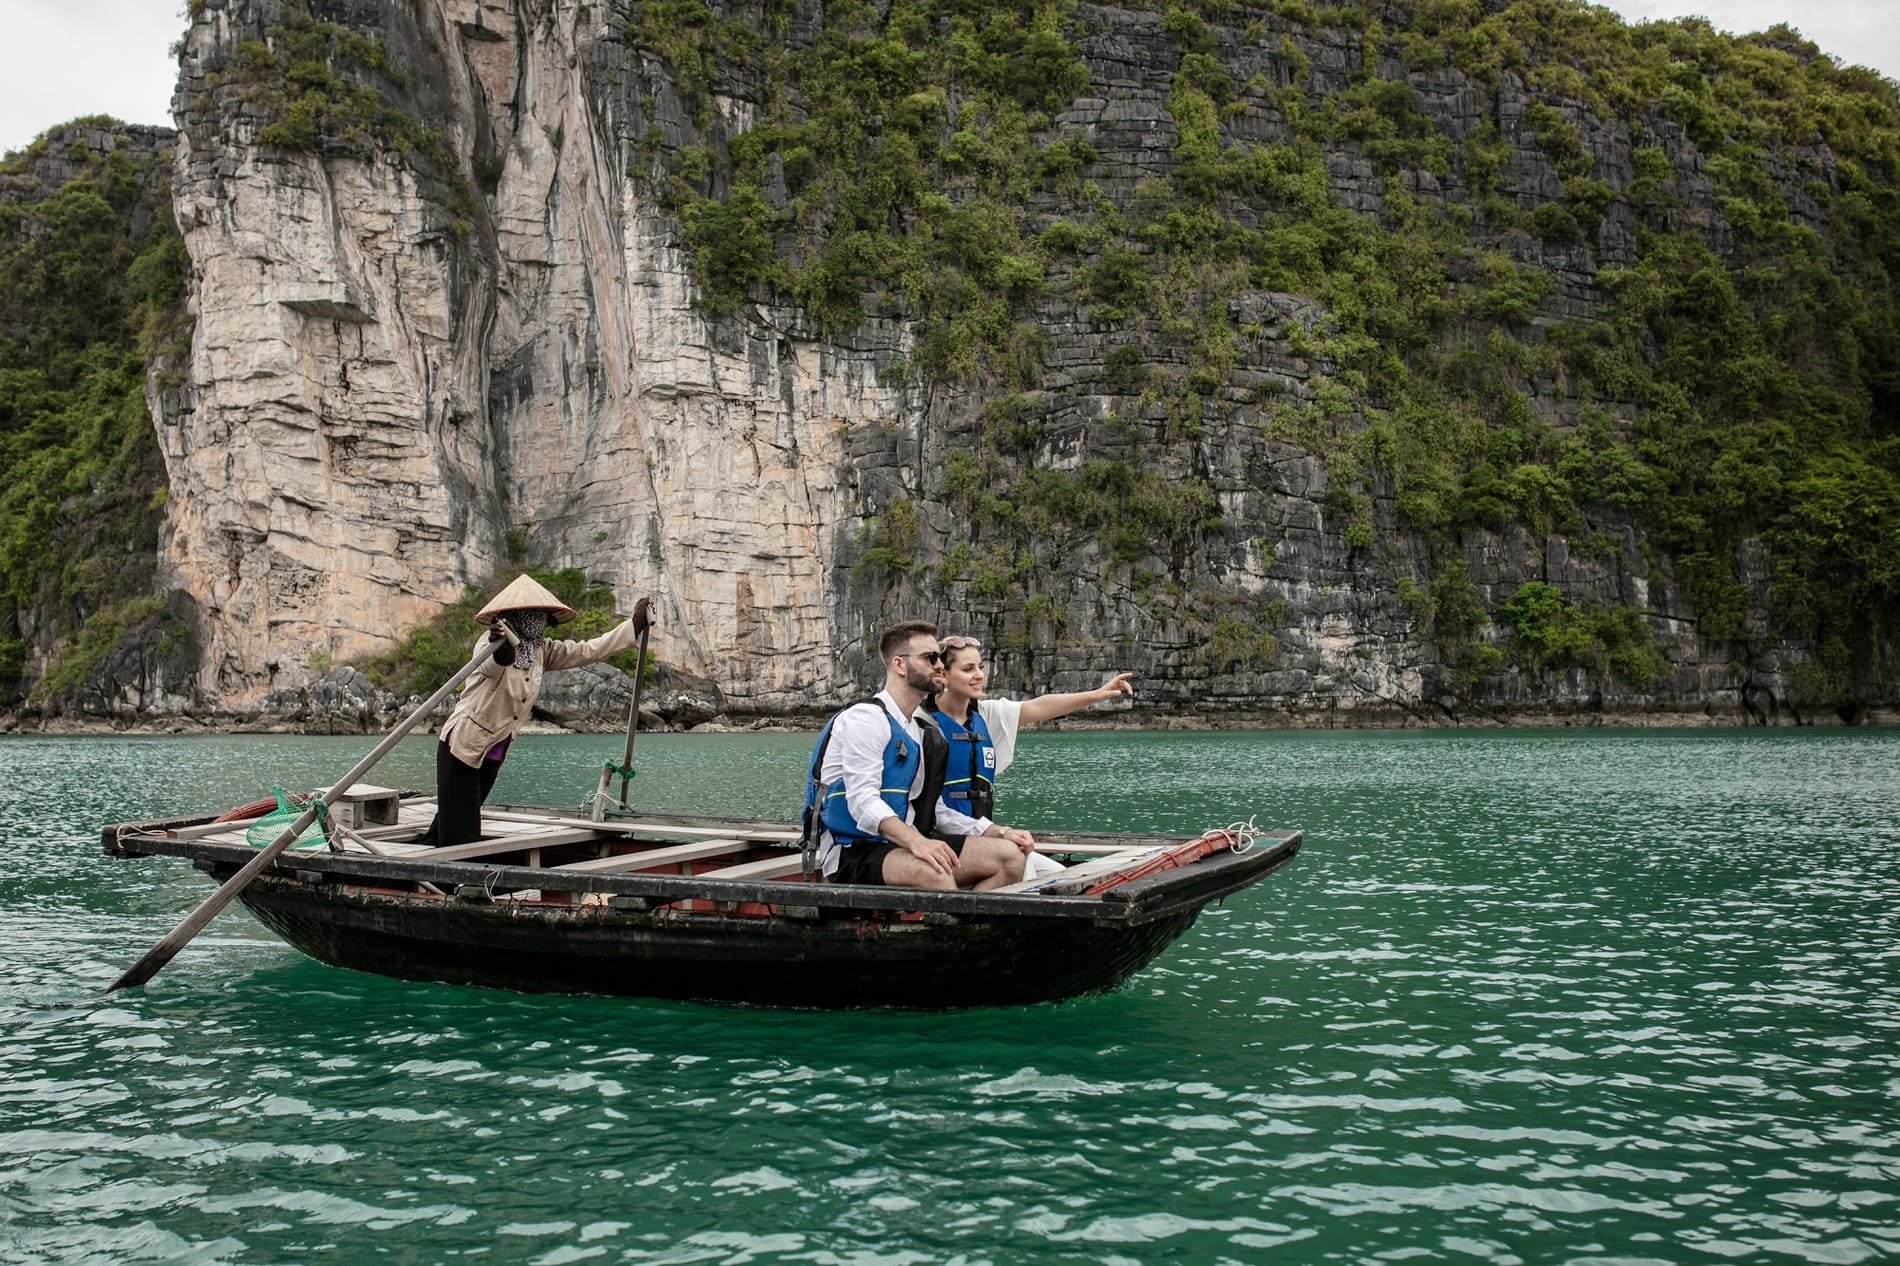 Halong bay natural wonder of the world in Vietnam